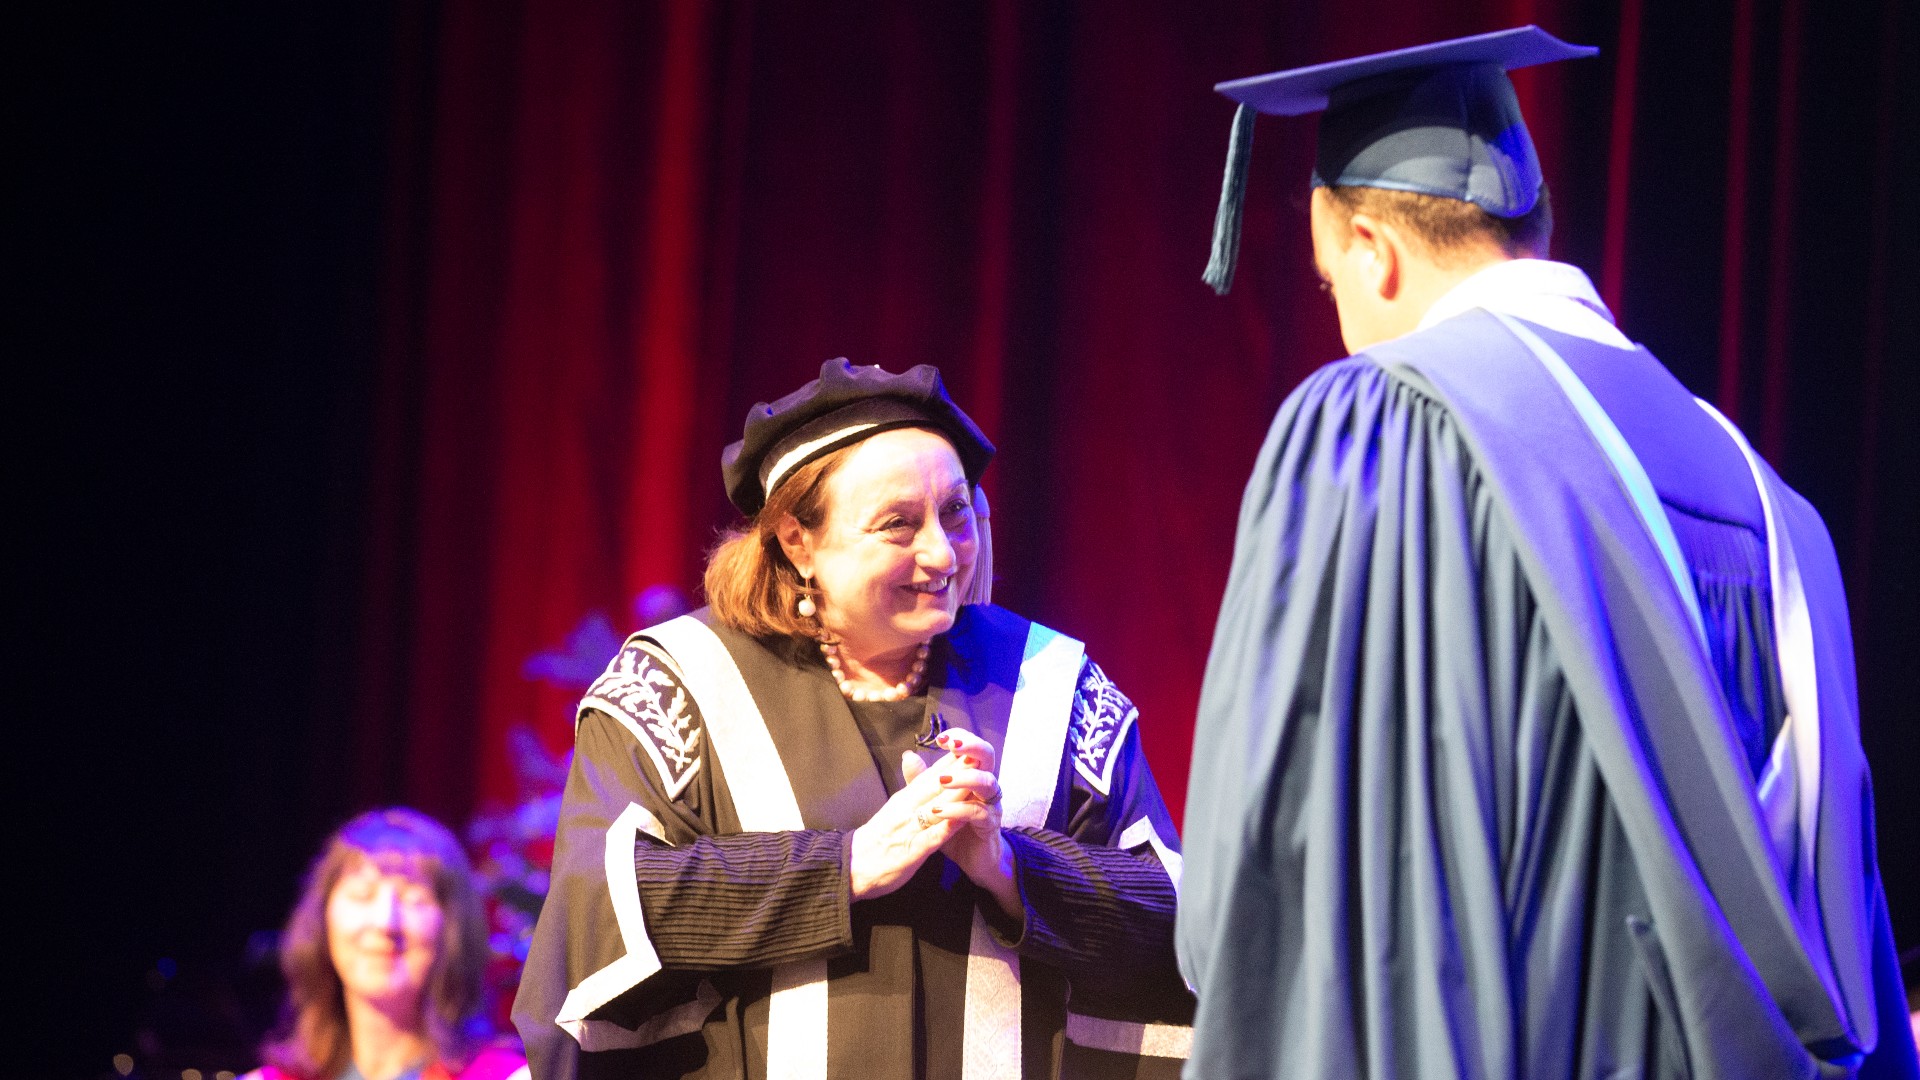 Vice Chancellor Professor Patricia Davidson greets a student on stage at the Shoalhaven graduation ceremonies. Photo: Paul Jones